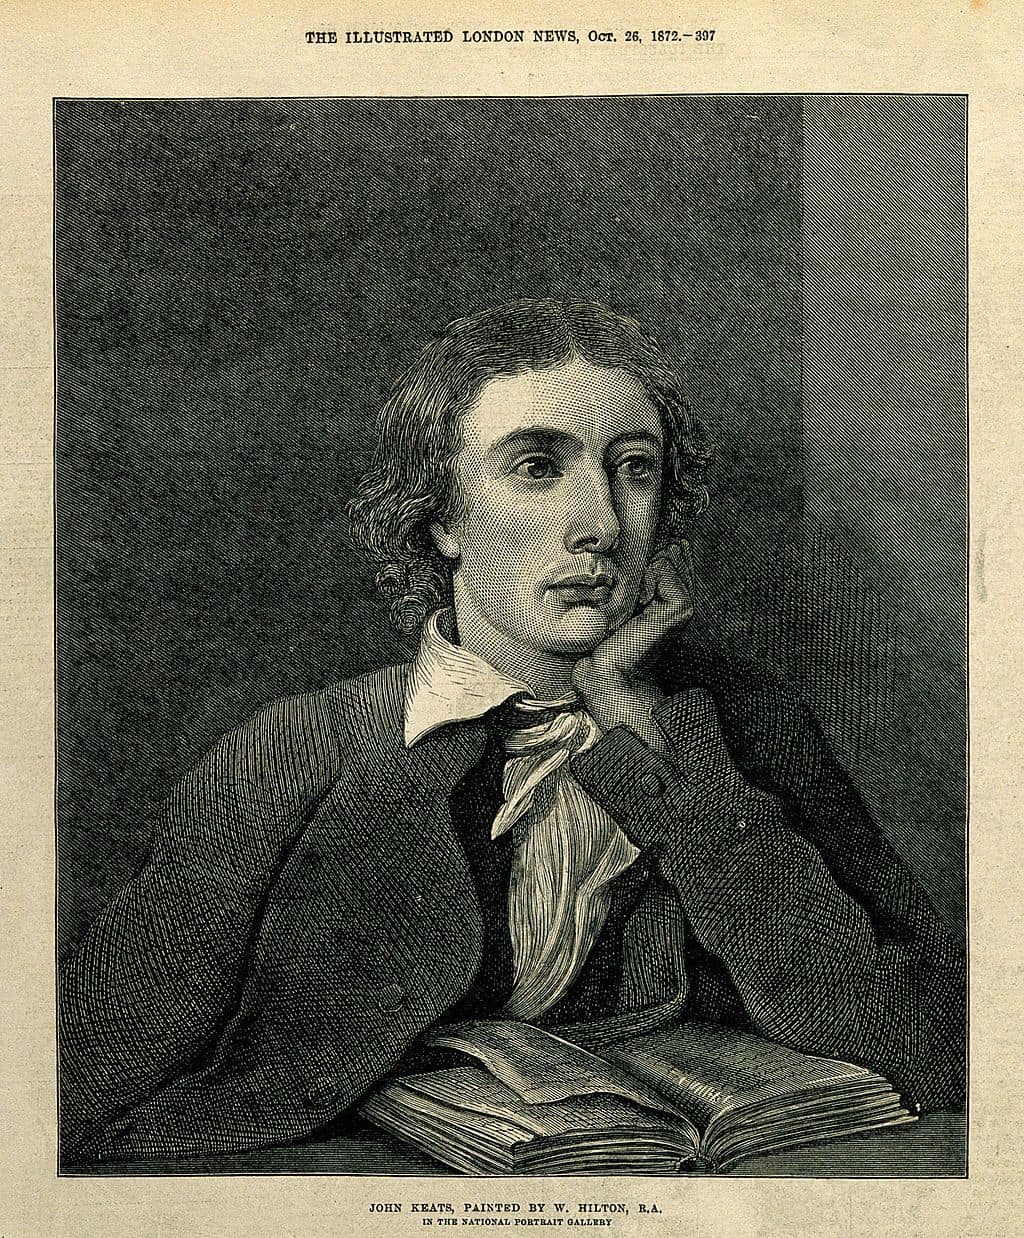 John Keats, Image: Wellcome Collection